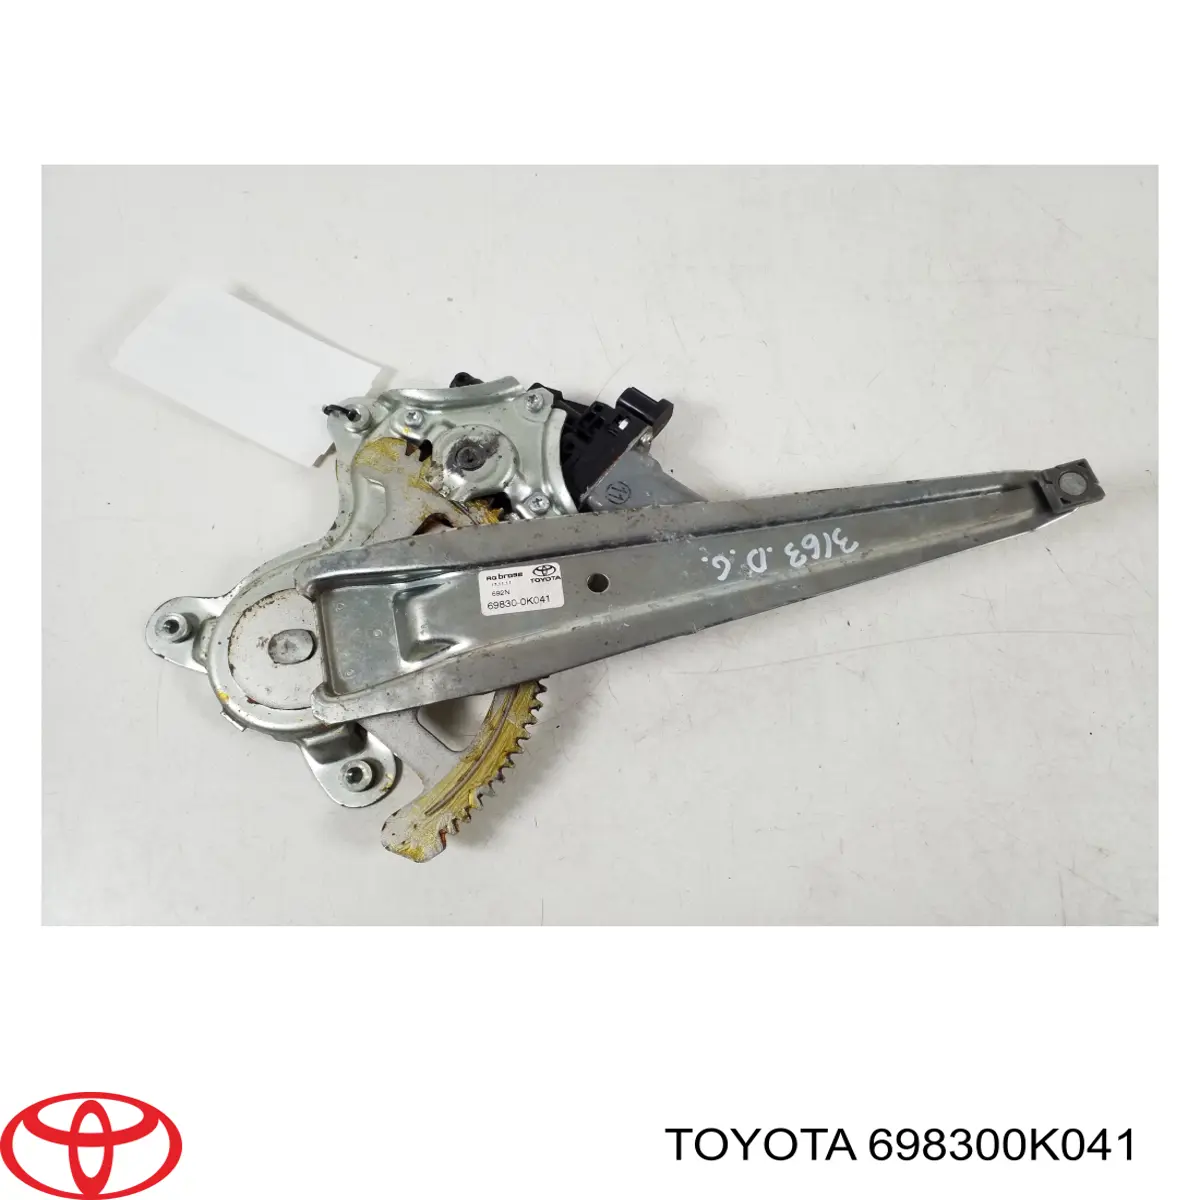 Mecanismo alzacristales, puerta trasera derecha para Toyota Hilux (KUN25)